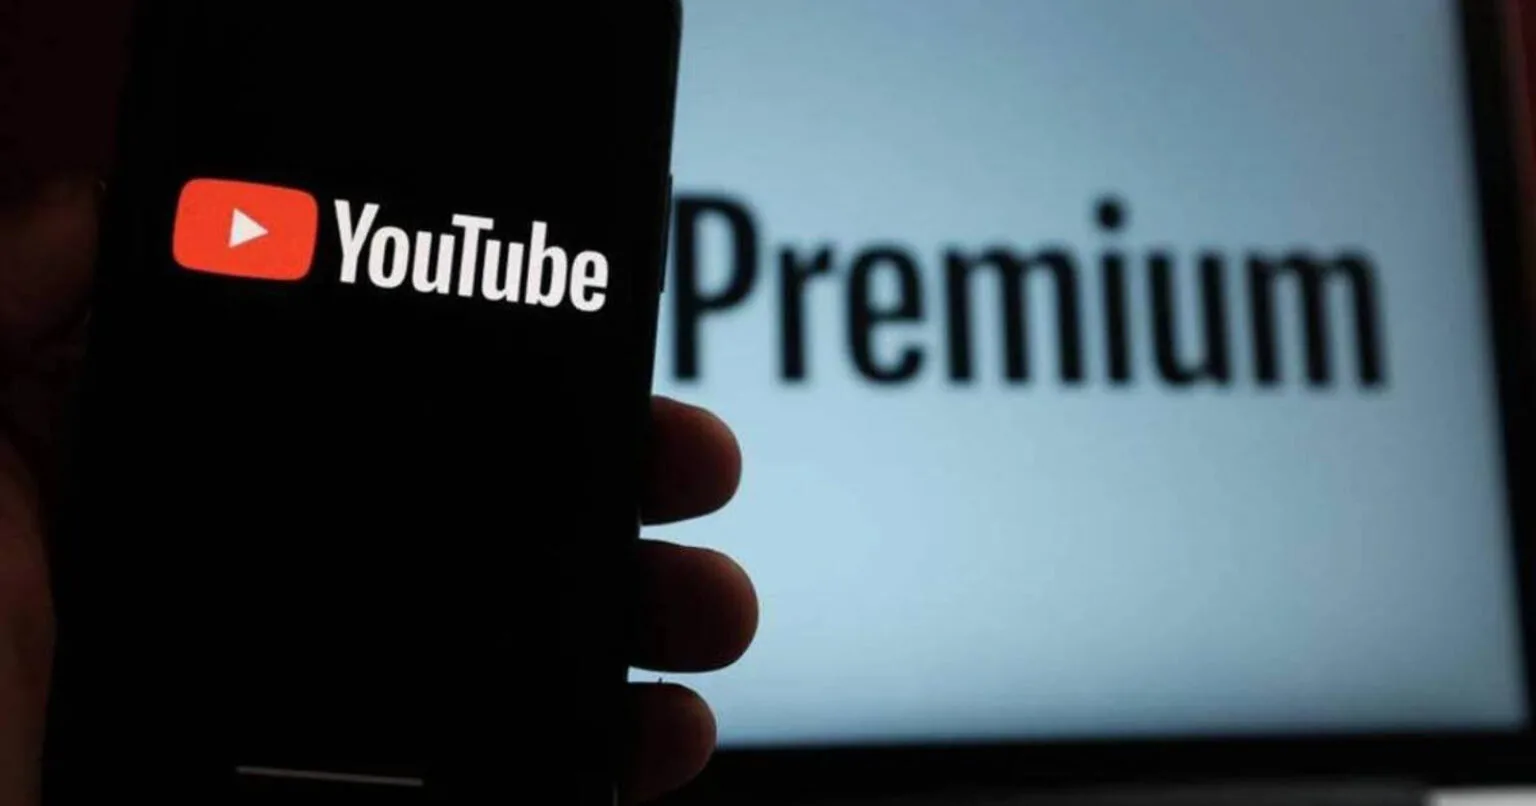 Youtube Premium subscribers announced!